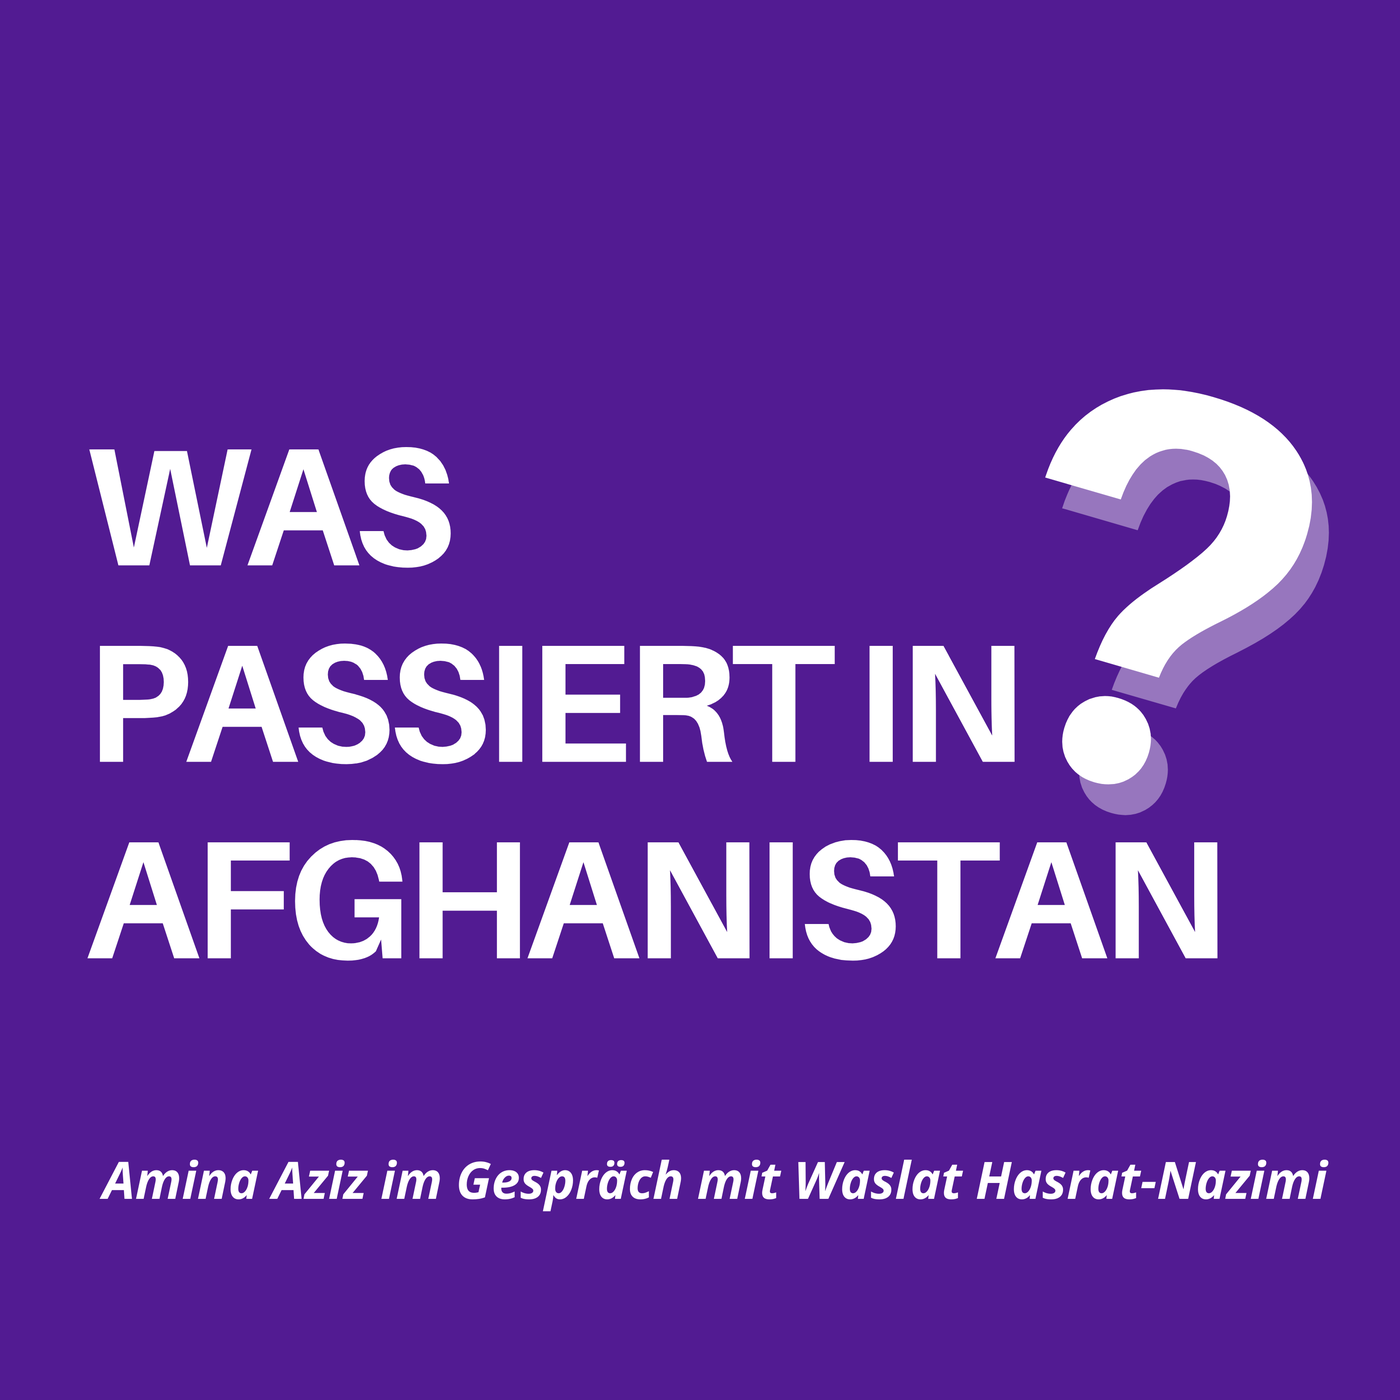 Was passiert in Afghanistan?